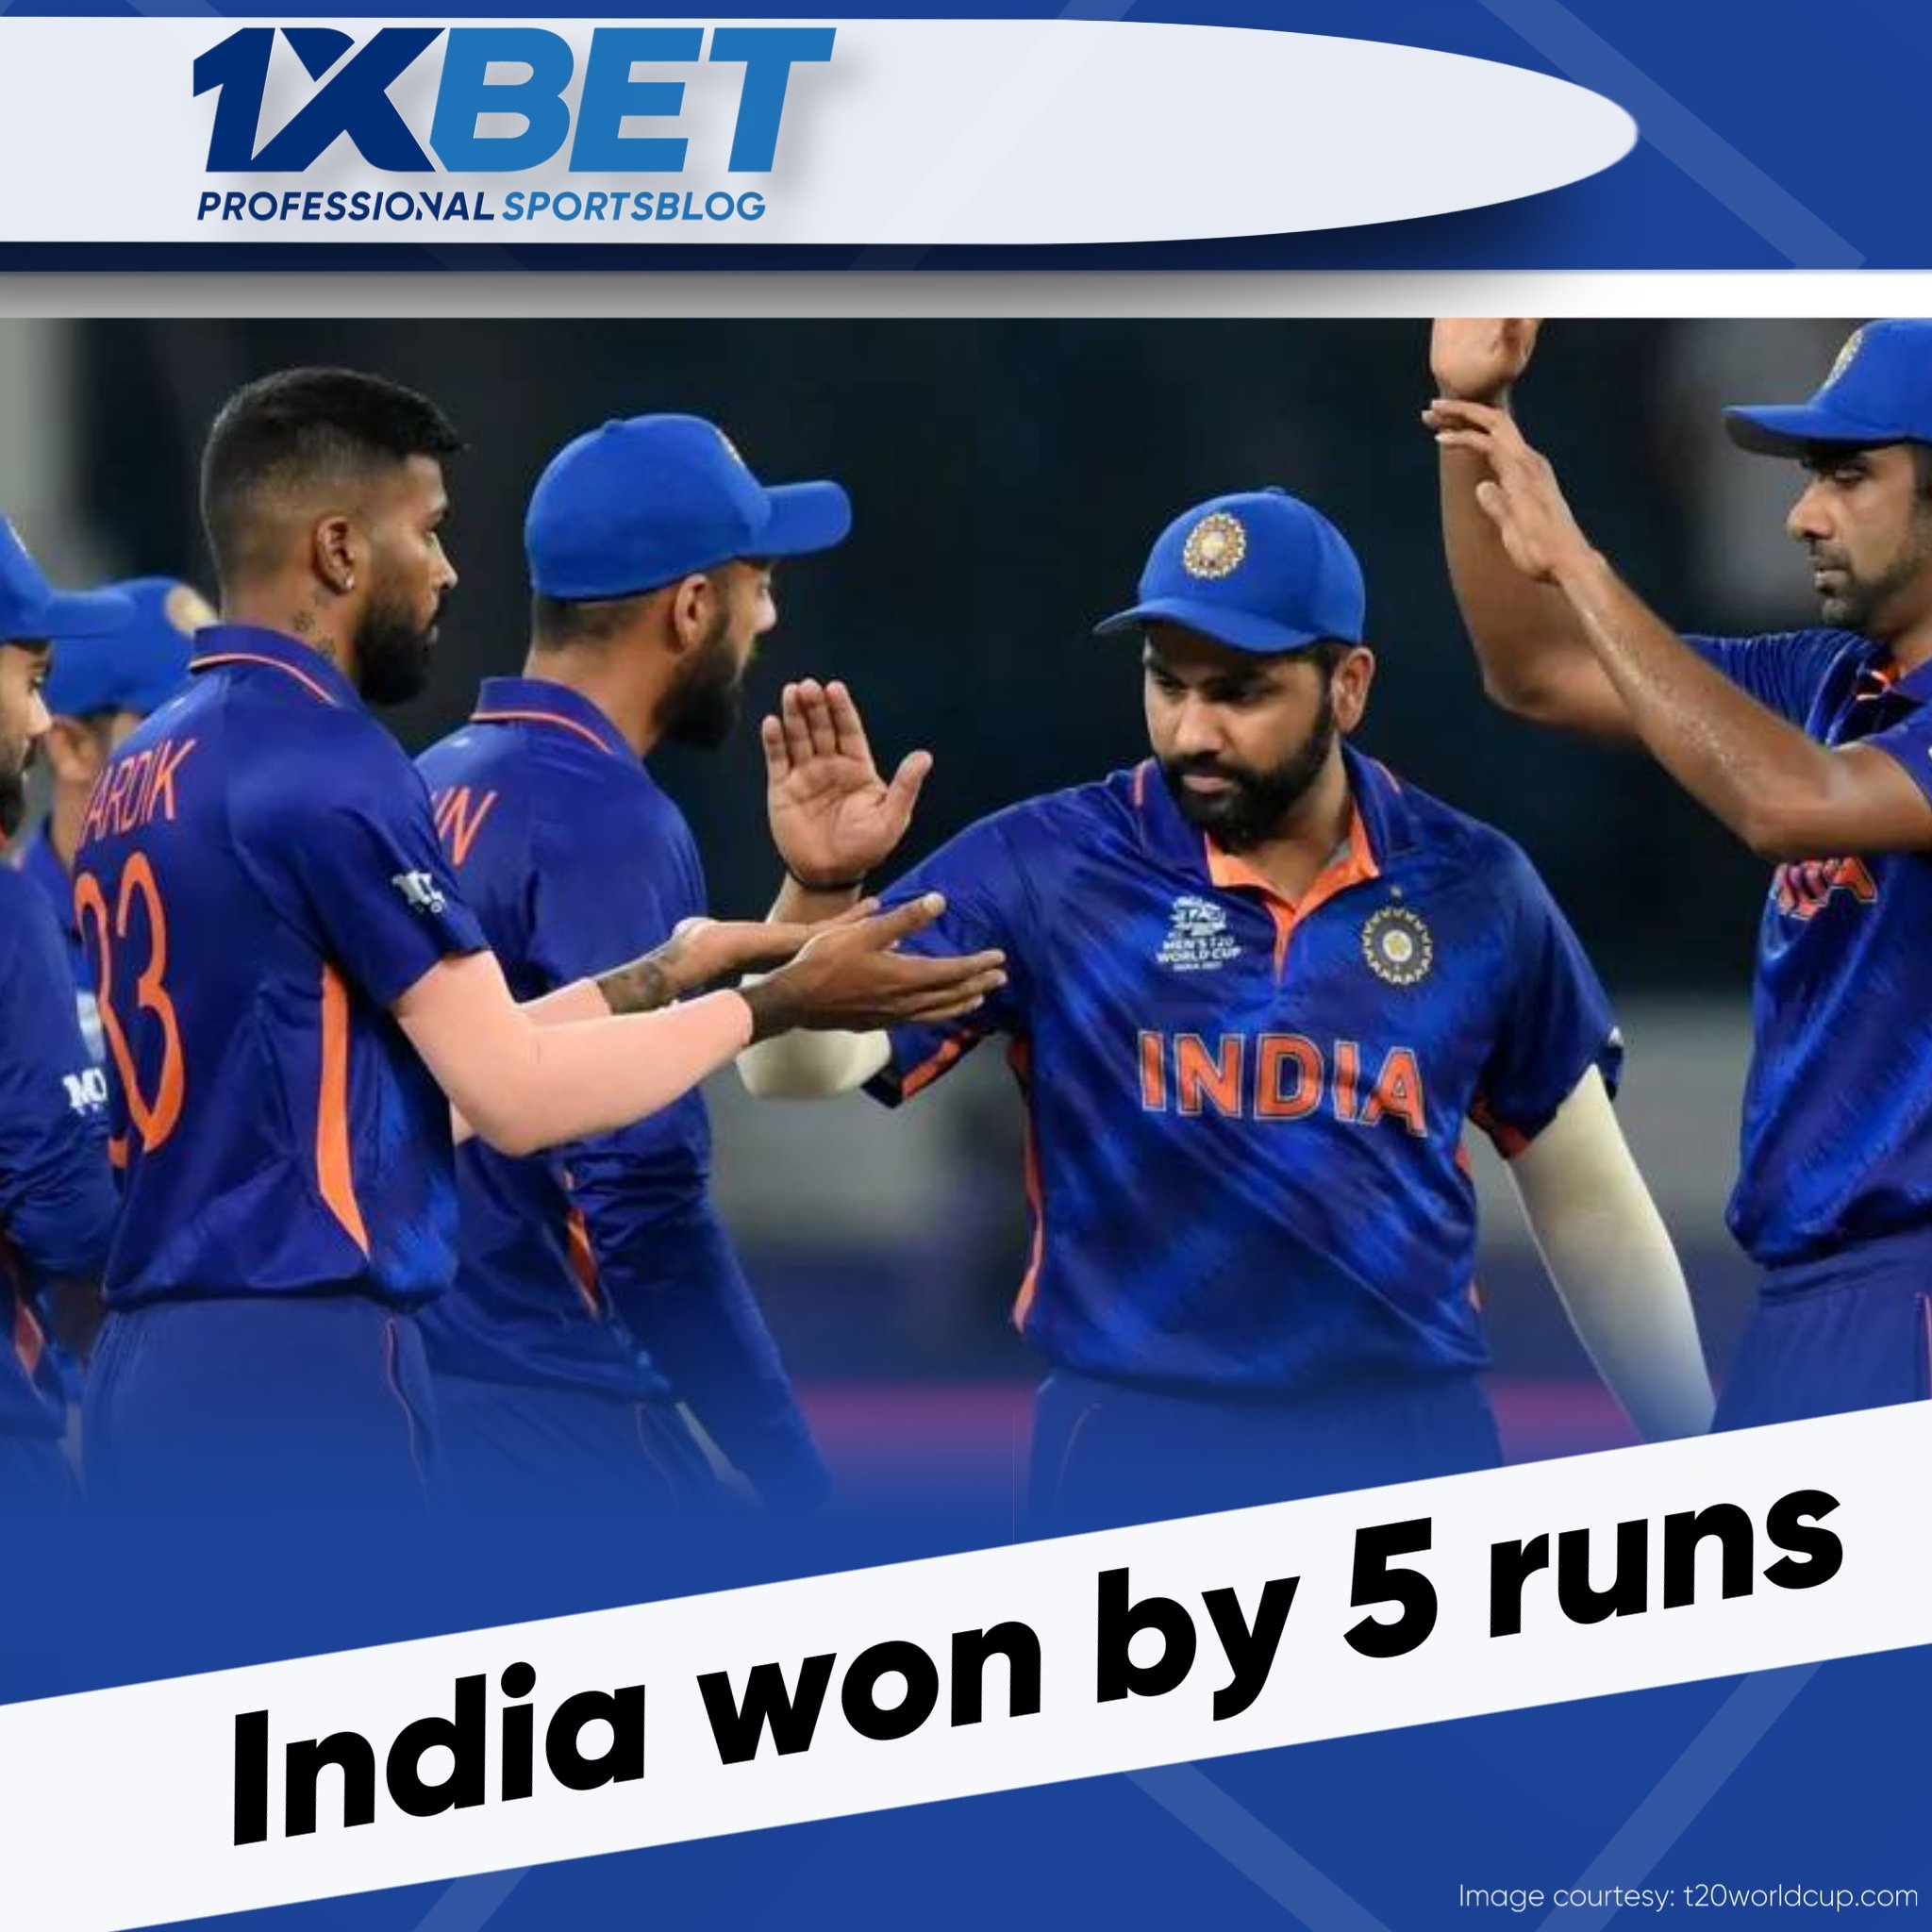 India won by 5 runs